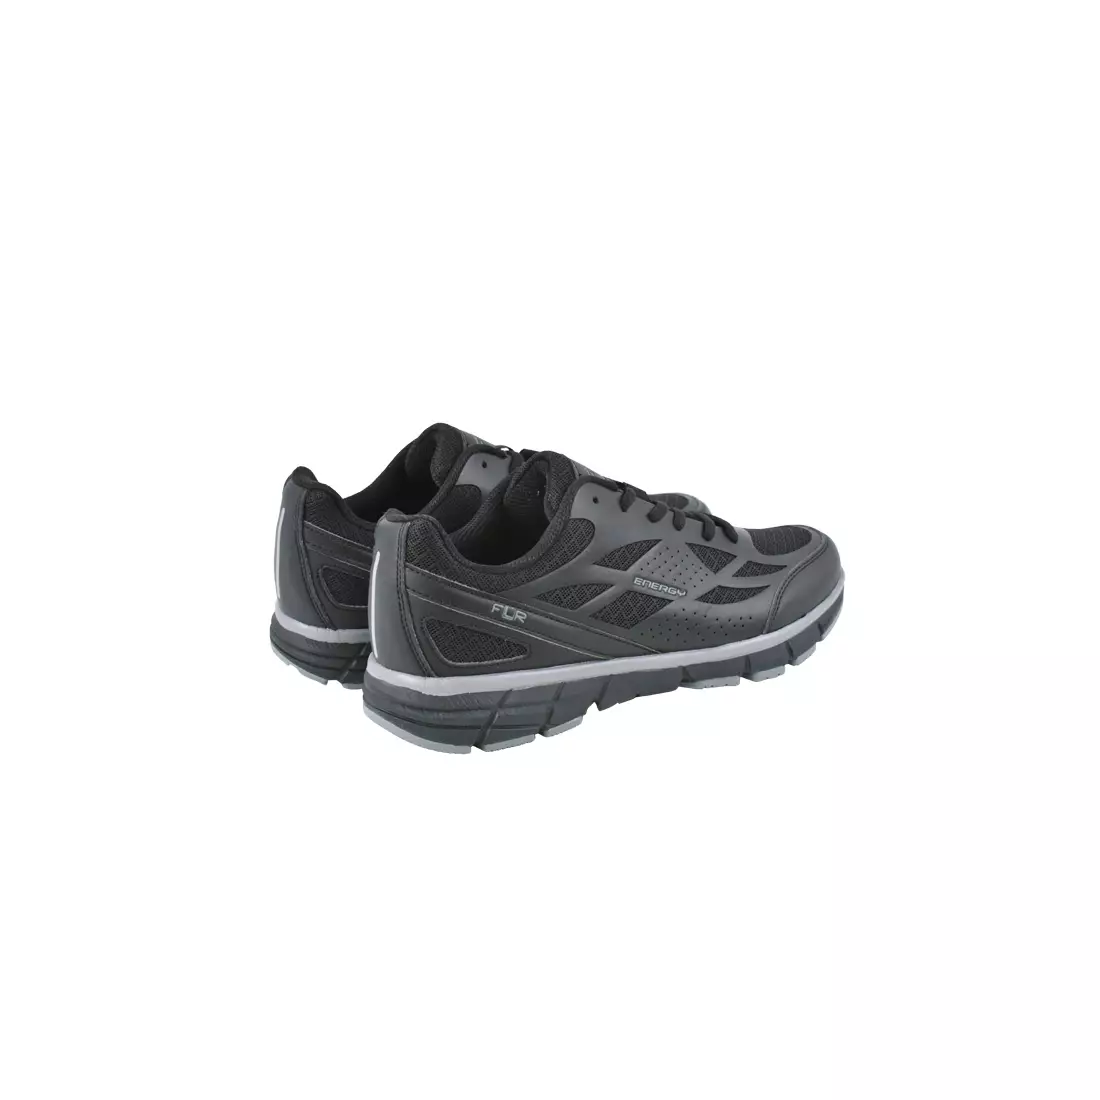 FLR cyklistická/športová obuv SPORT ENERGY black/grey